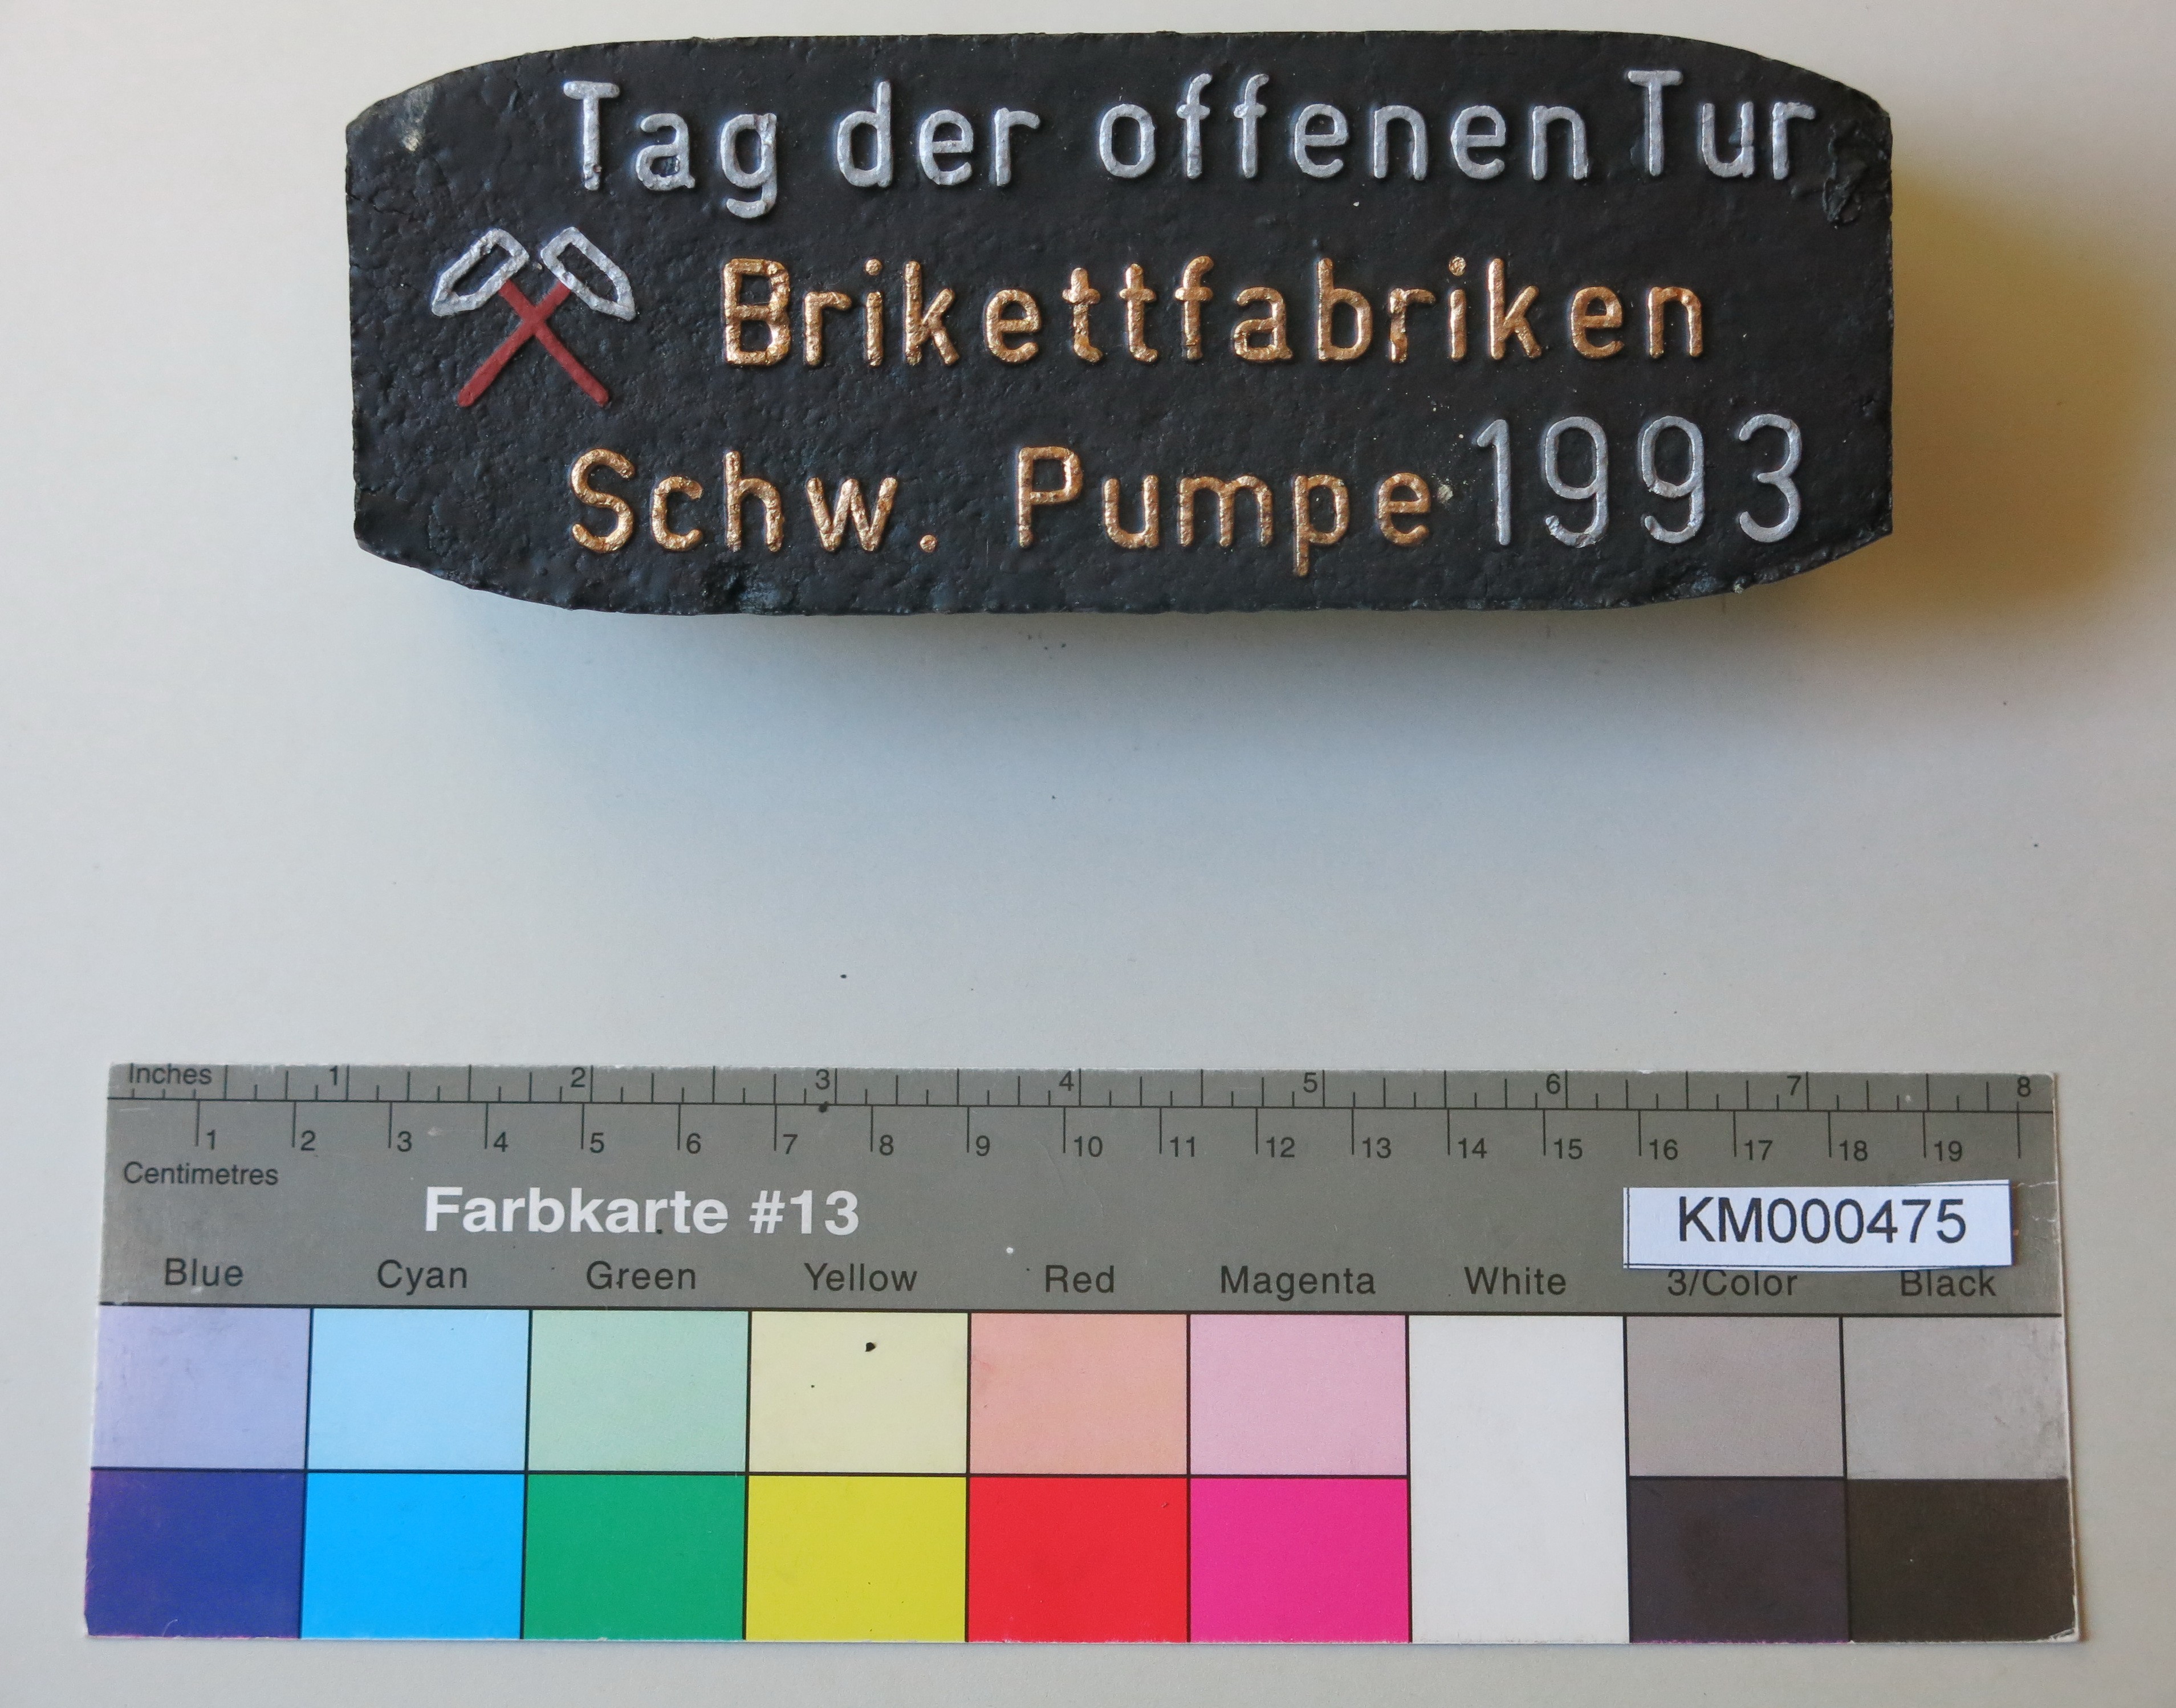 Zierbrikett " Tag der offenen Brikettfabriken Schw. Pumpe 1993" (Energiefabrik Knappenrode CC BY-SA)